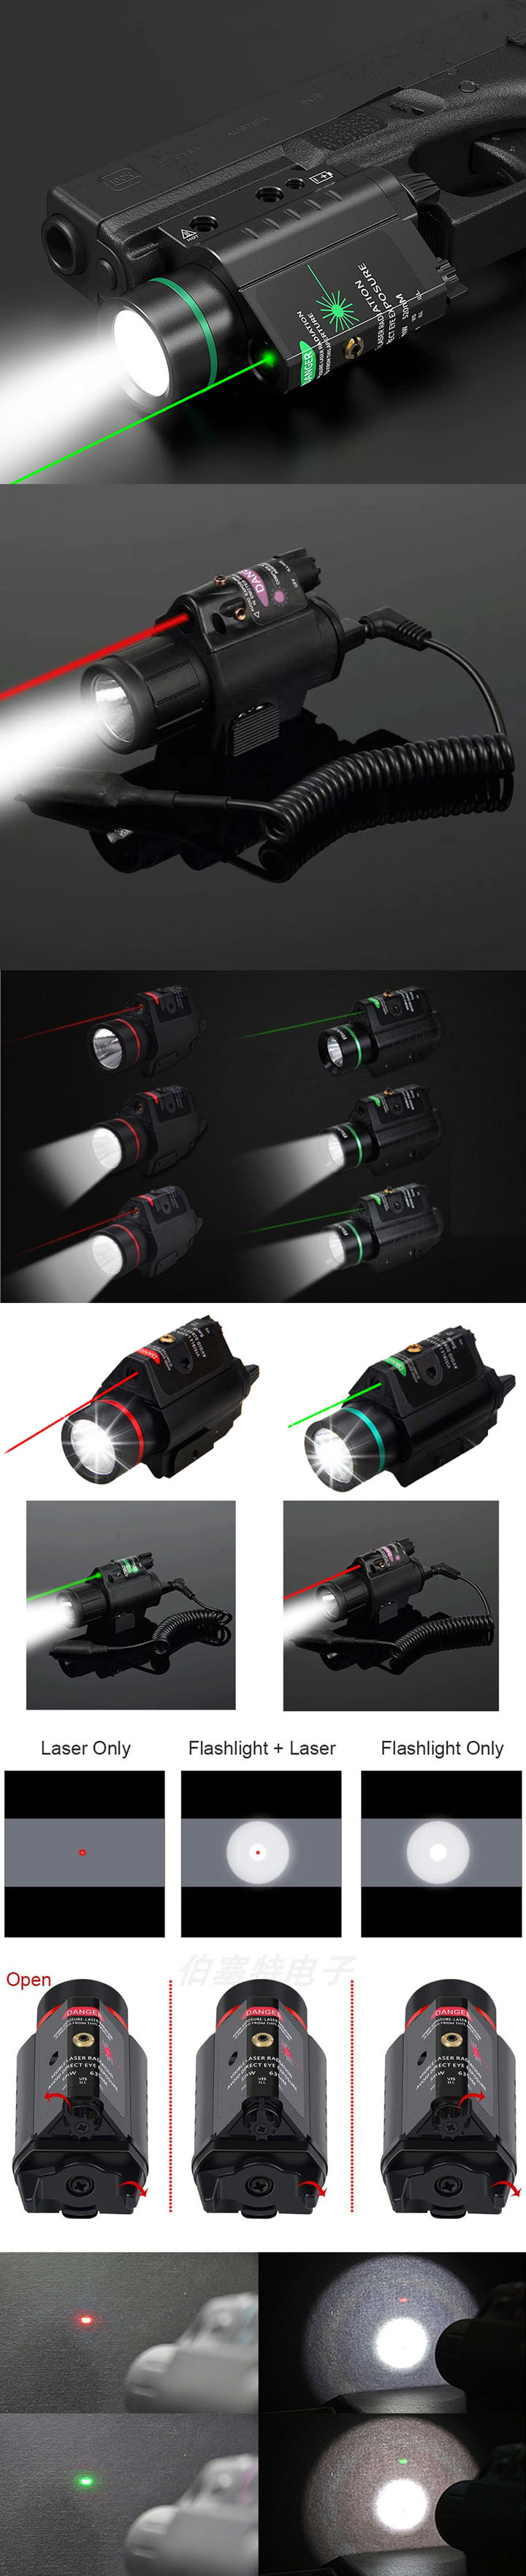 Laser Richtkijker met Tactisch Licht